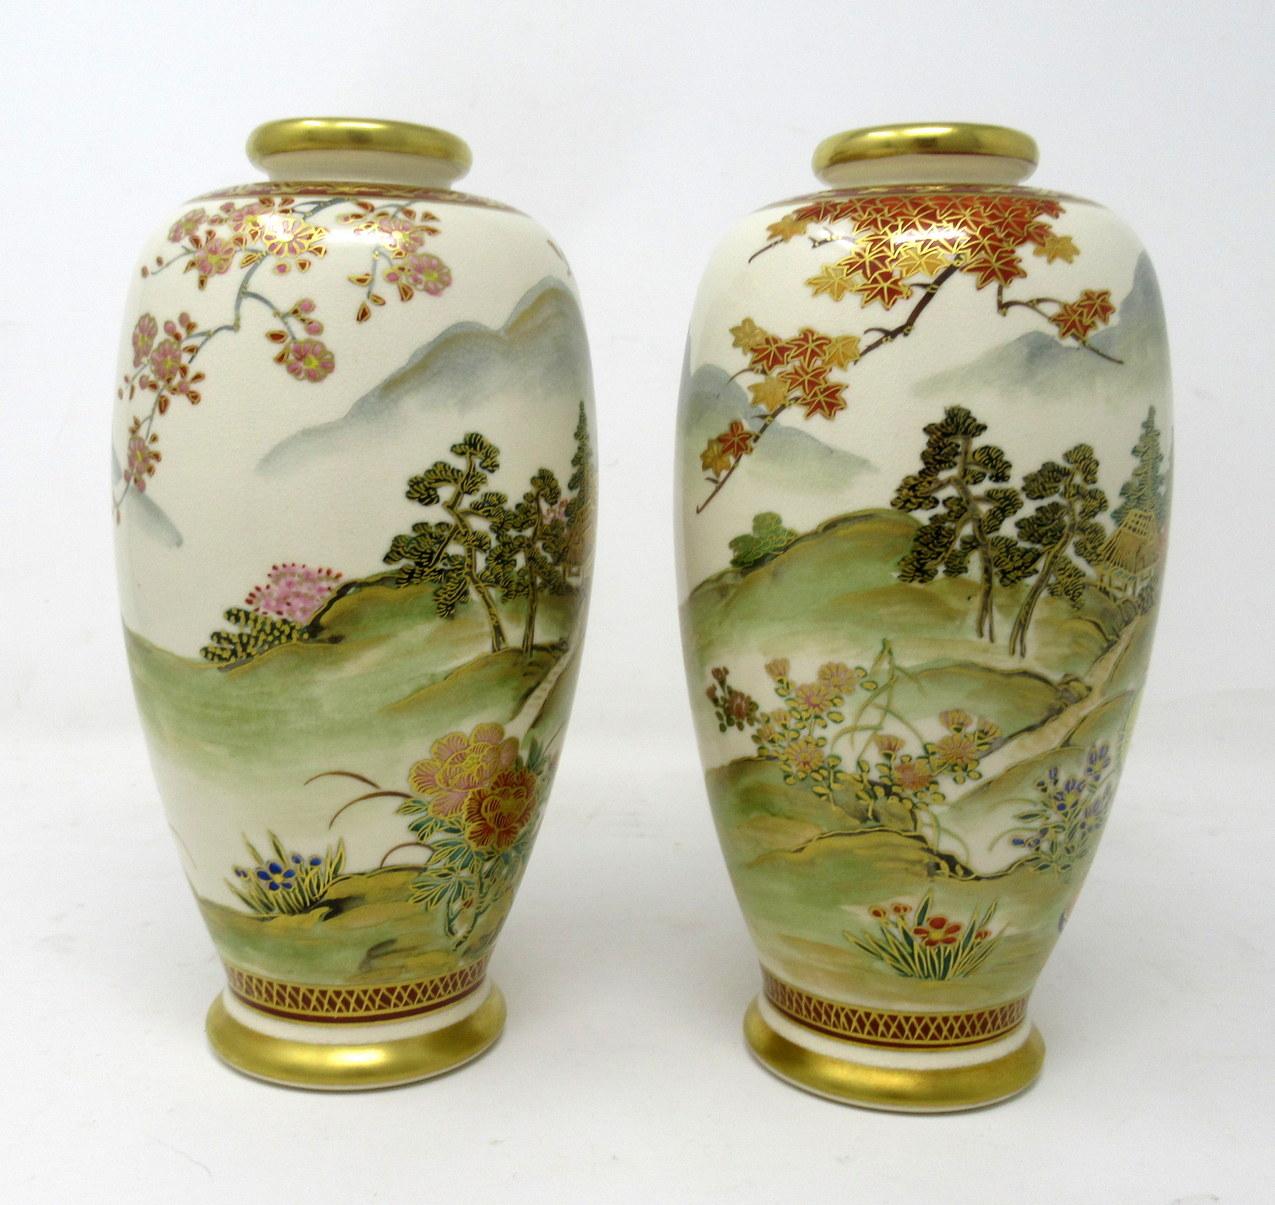 Ceramic Antique Vintage Pair Japanese Hand Painted Gilt Vases Meiji Period Japan Figures